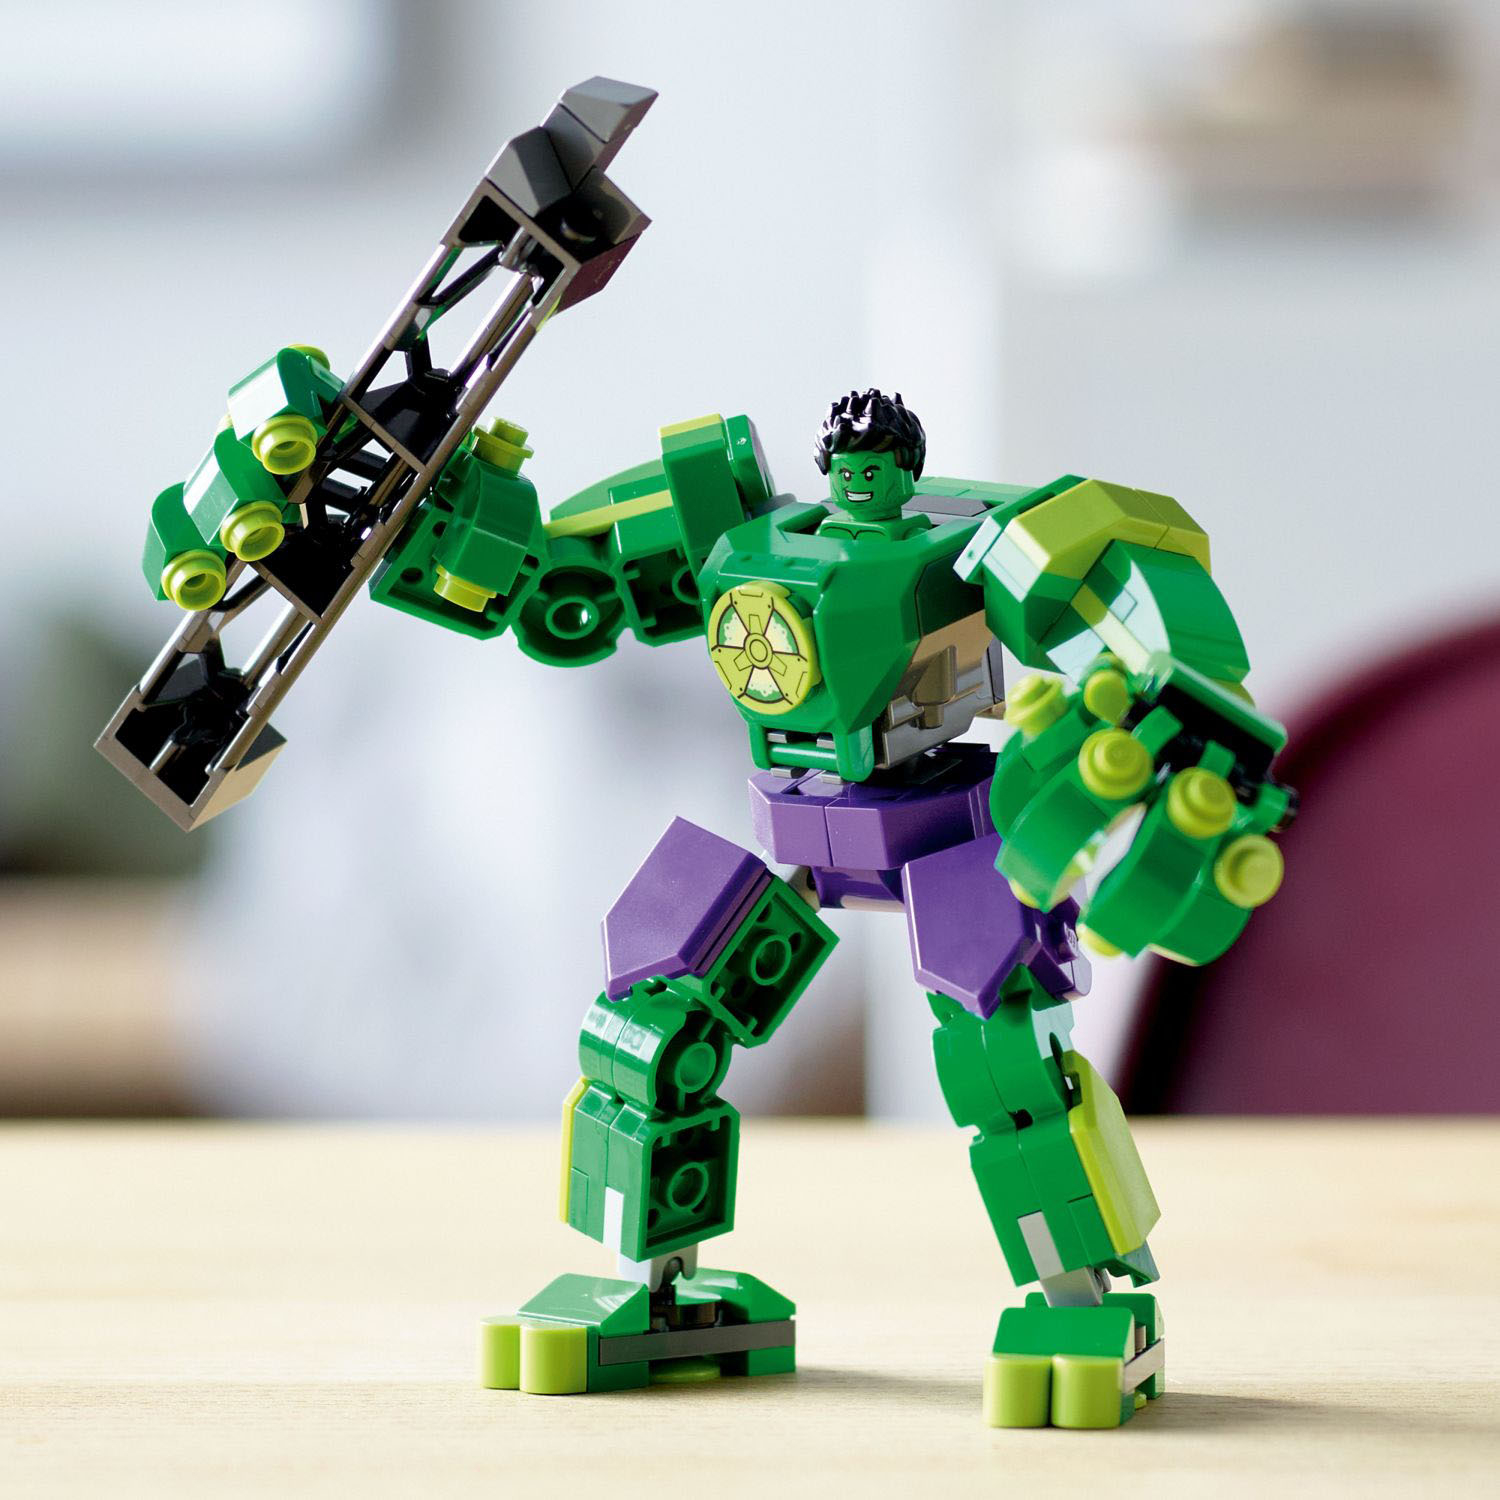 LEGO Spider-Man: Hulk vs. Rhino Truck Showdown - Imagination